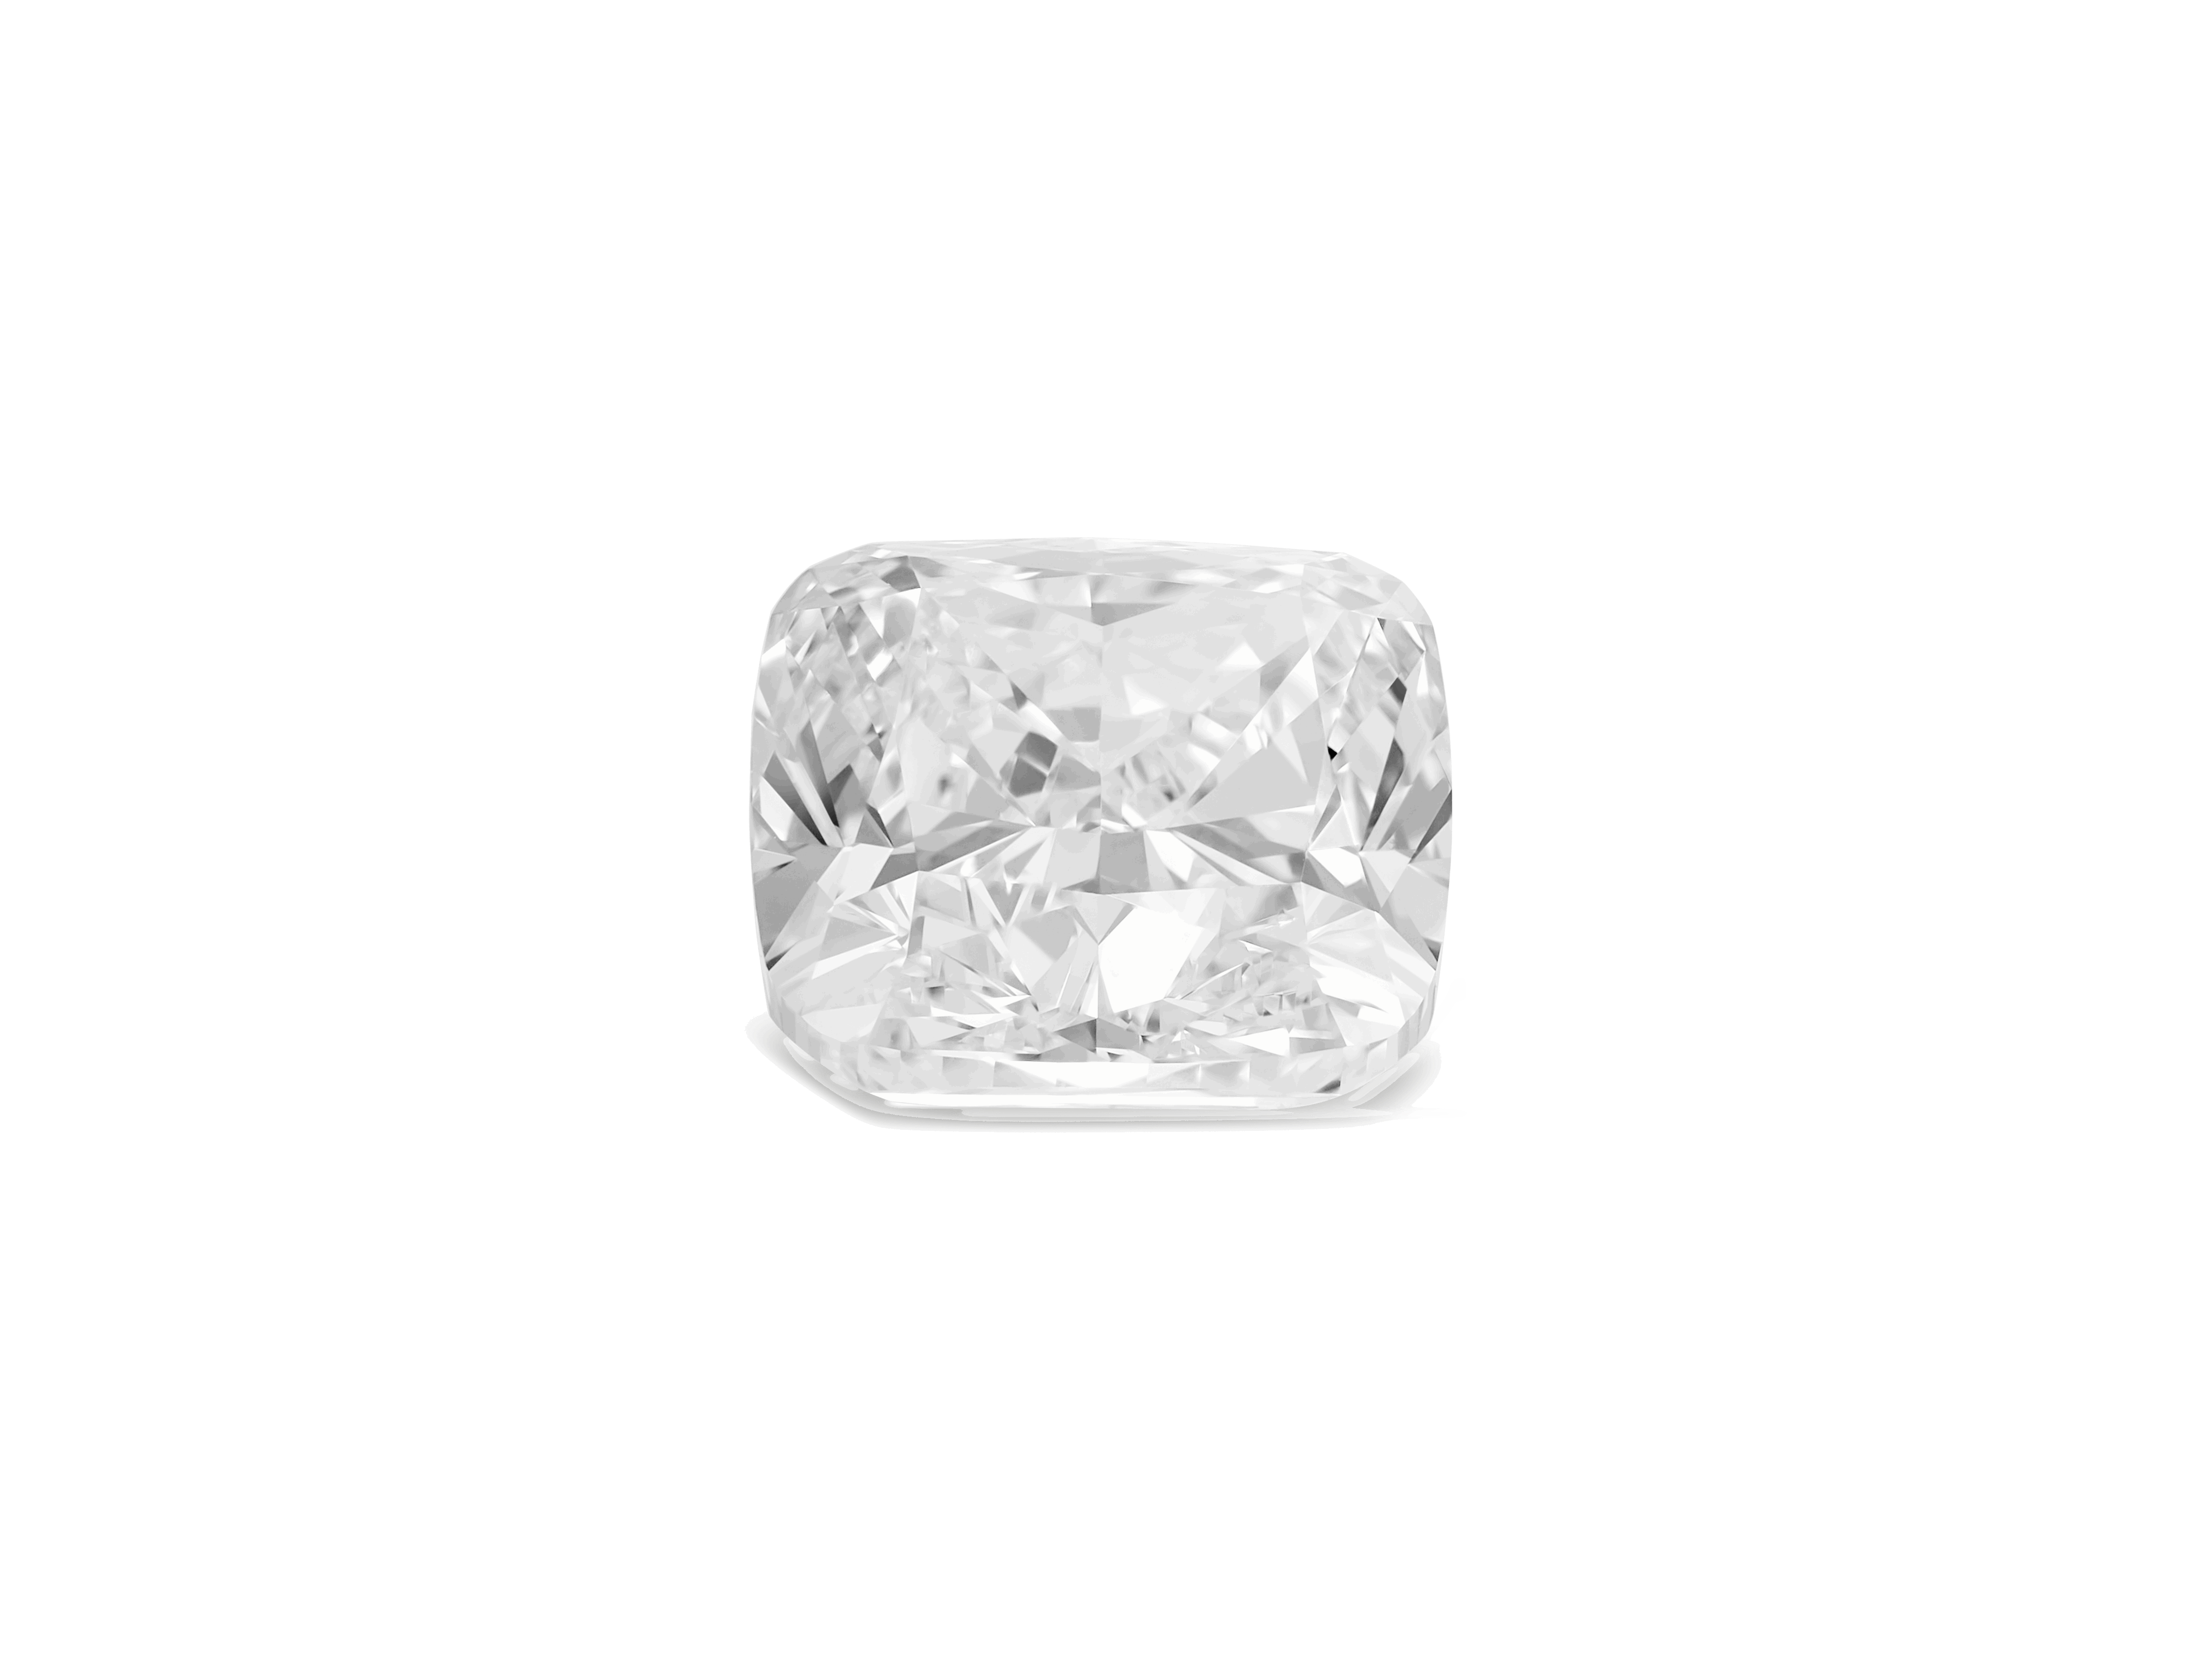 Front view of 3 carat cushion cut diamond